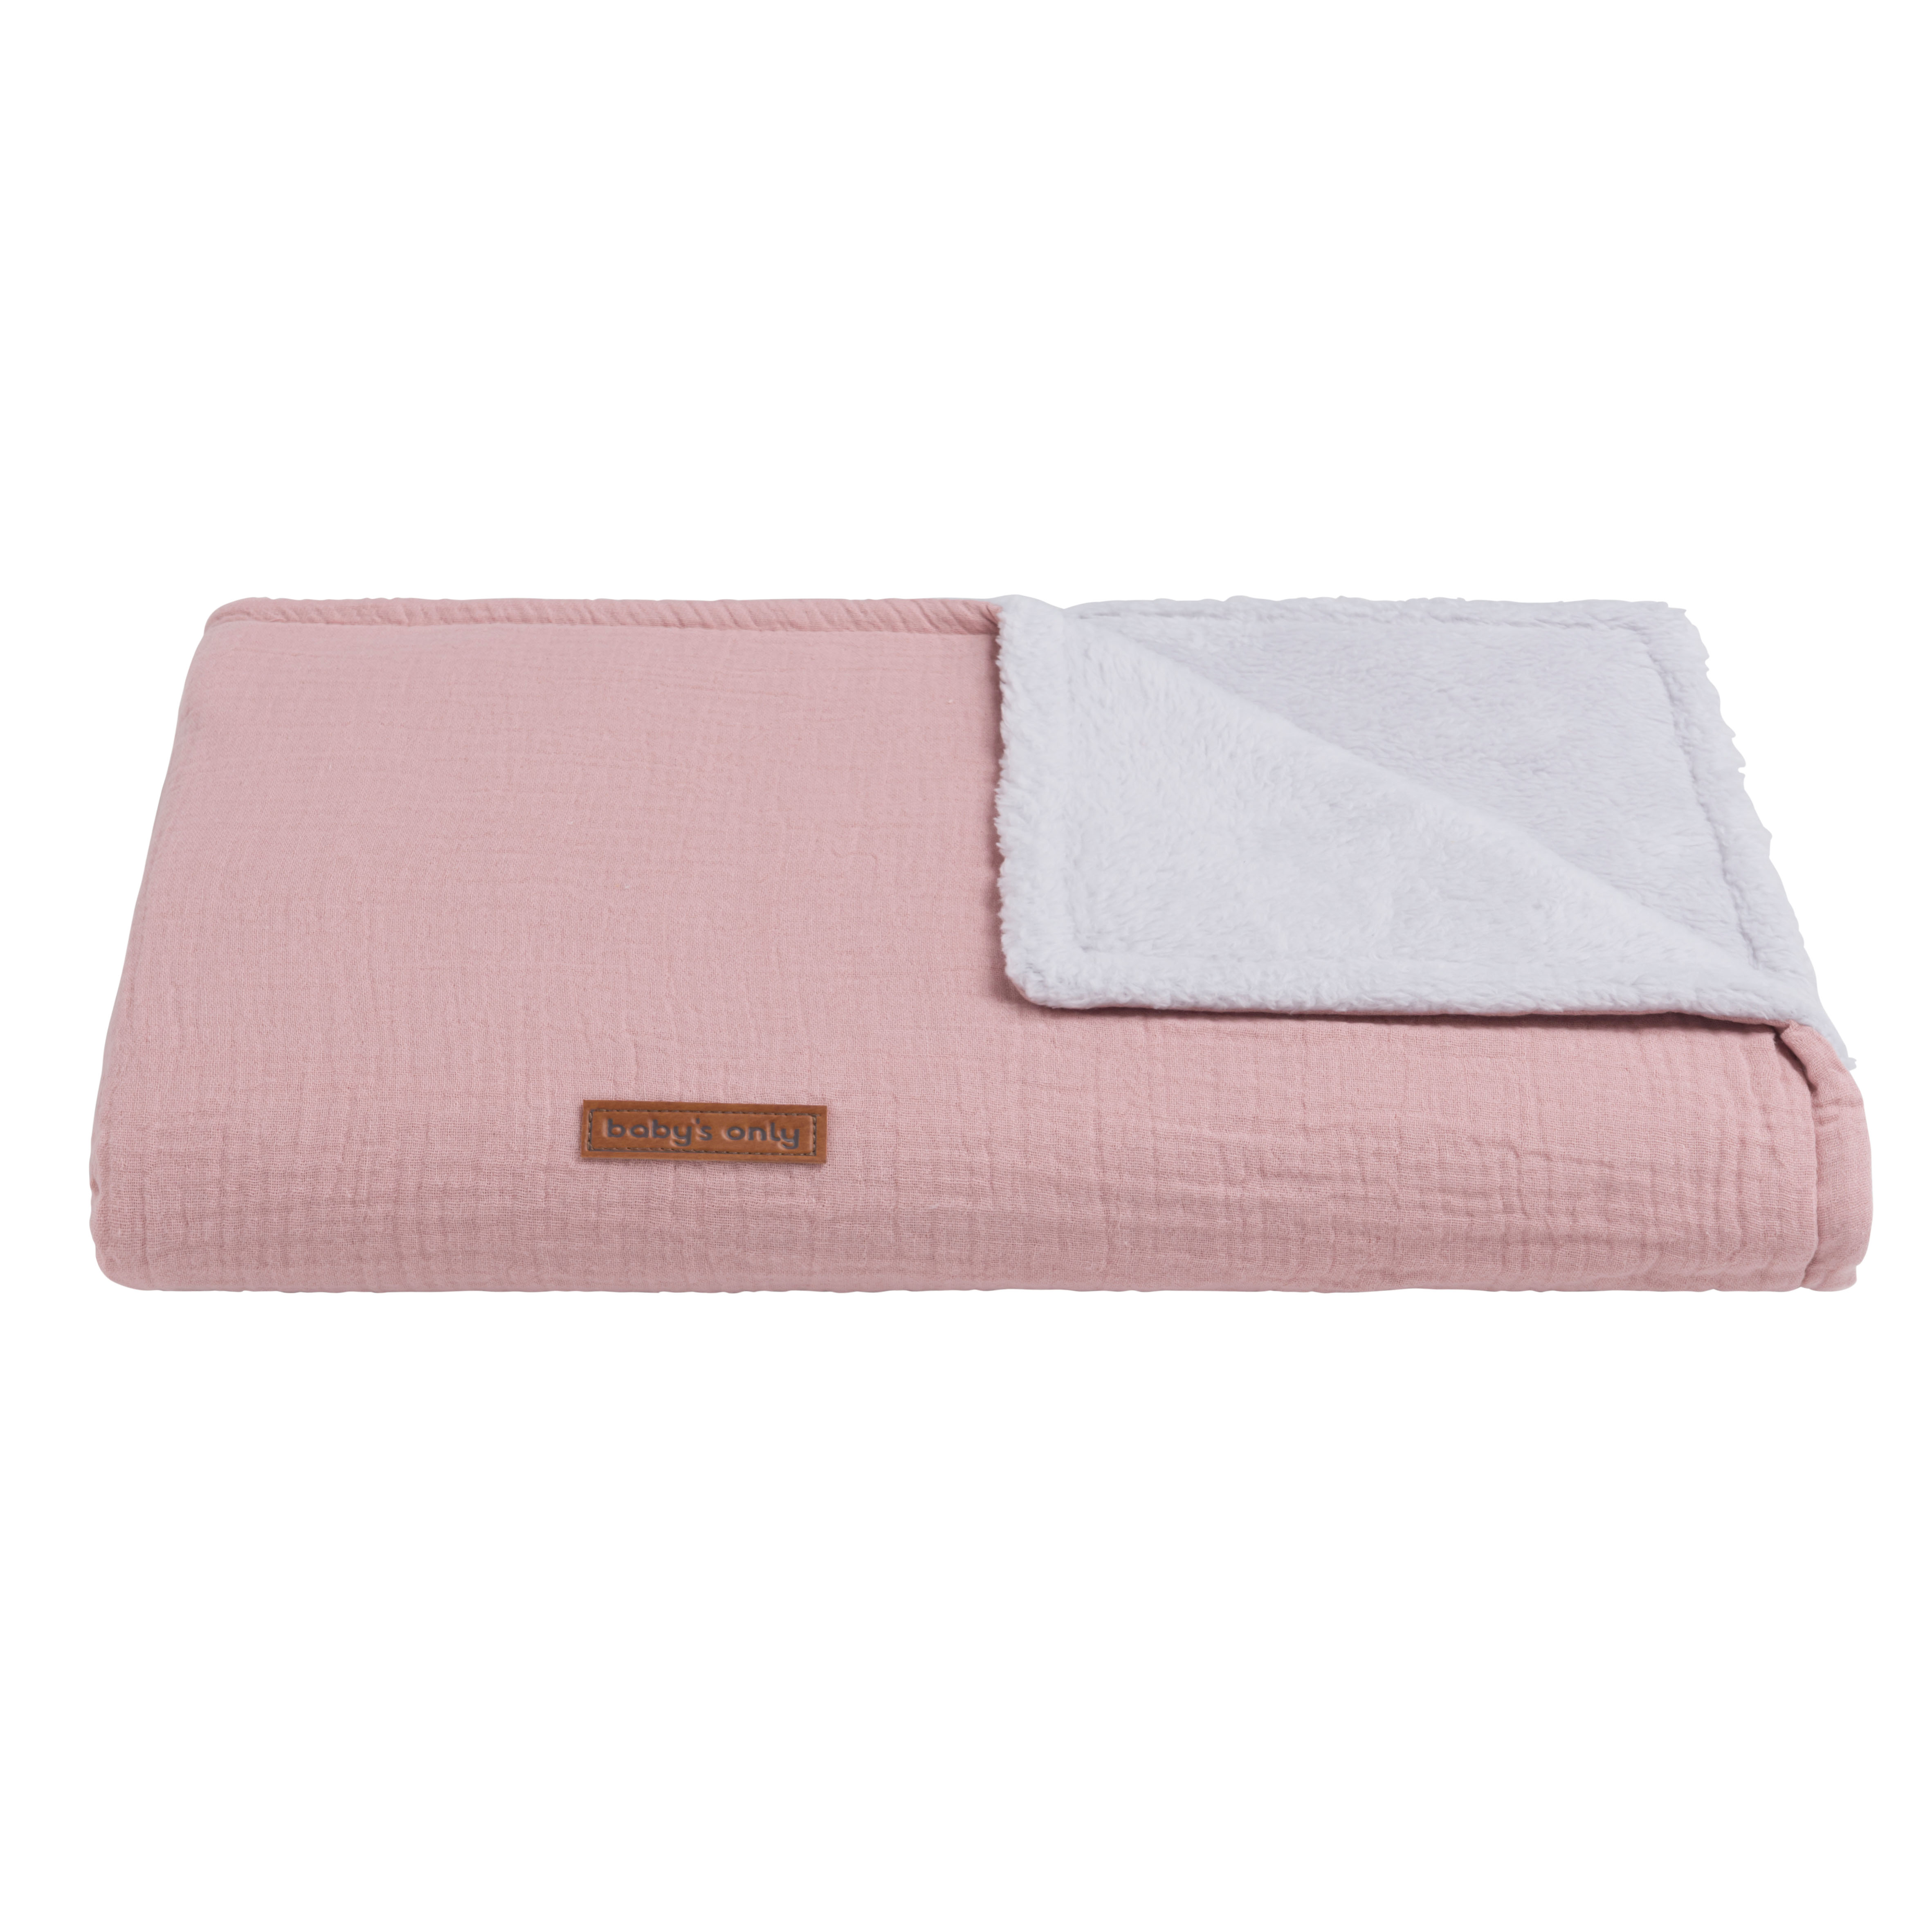 Cot blanket teddy Breeze old pink